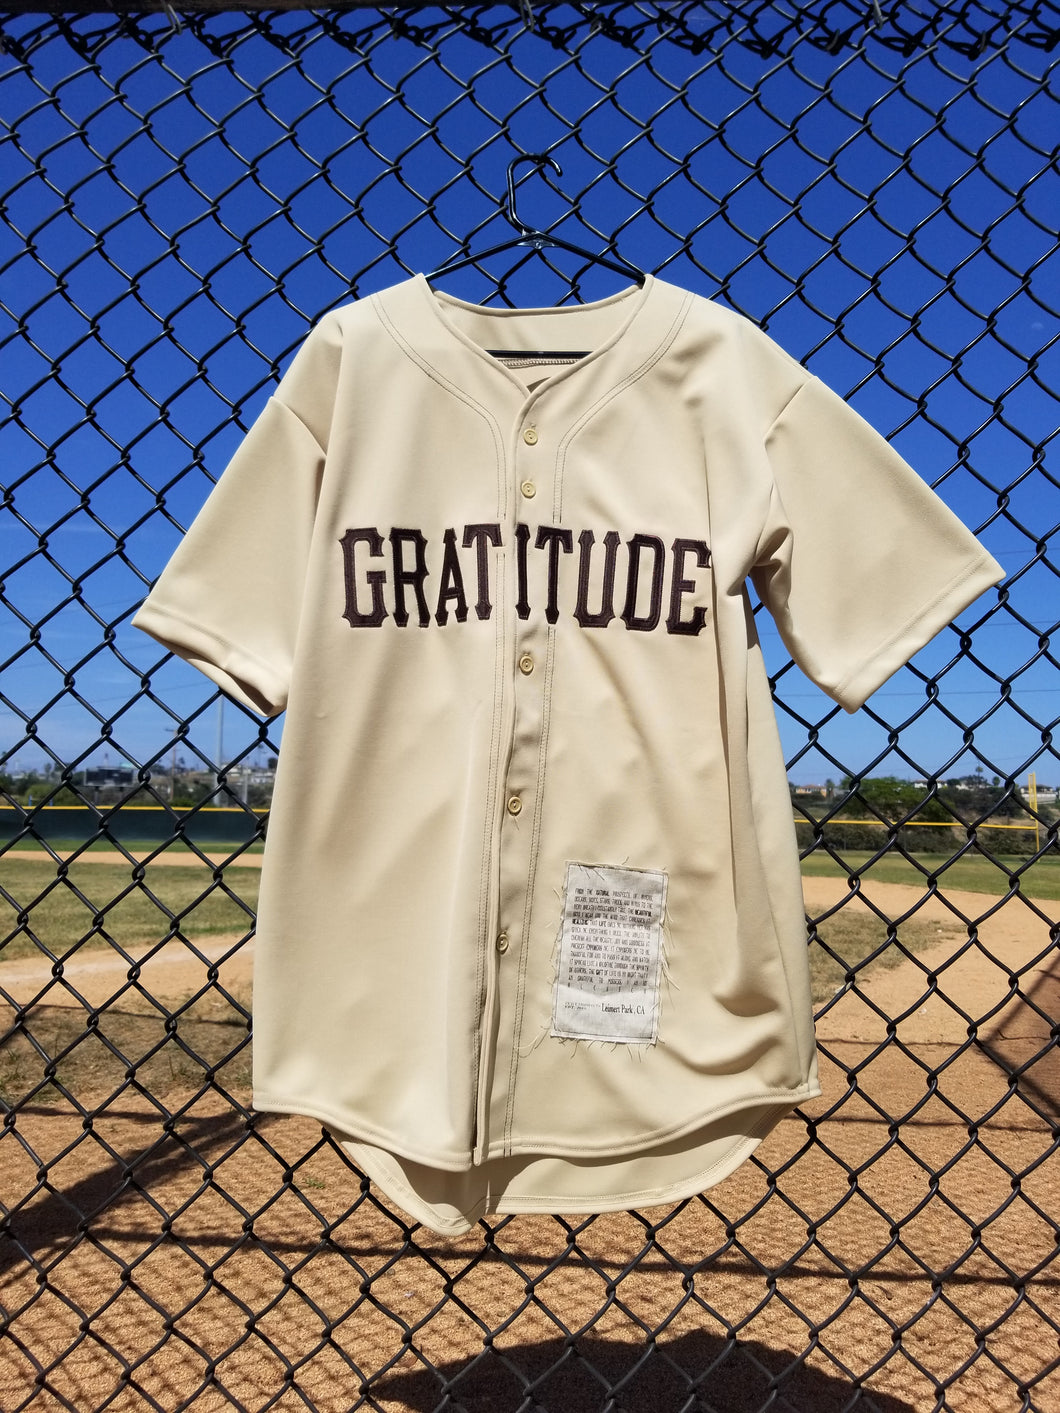 Gratitude Baseball Jersey